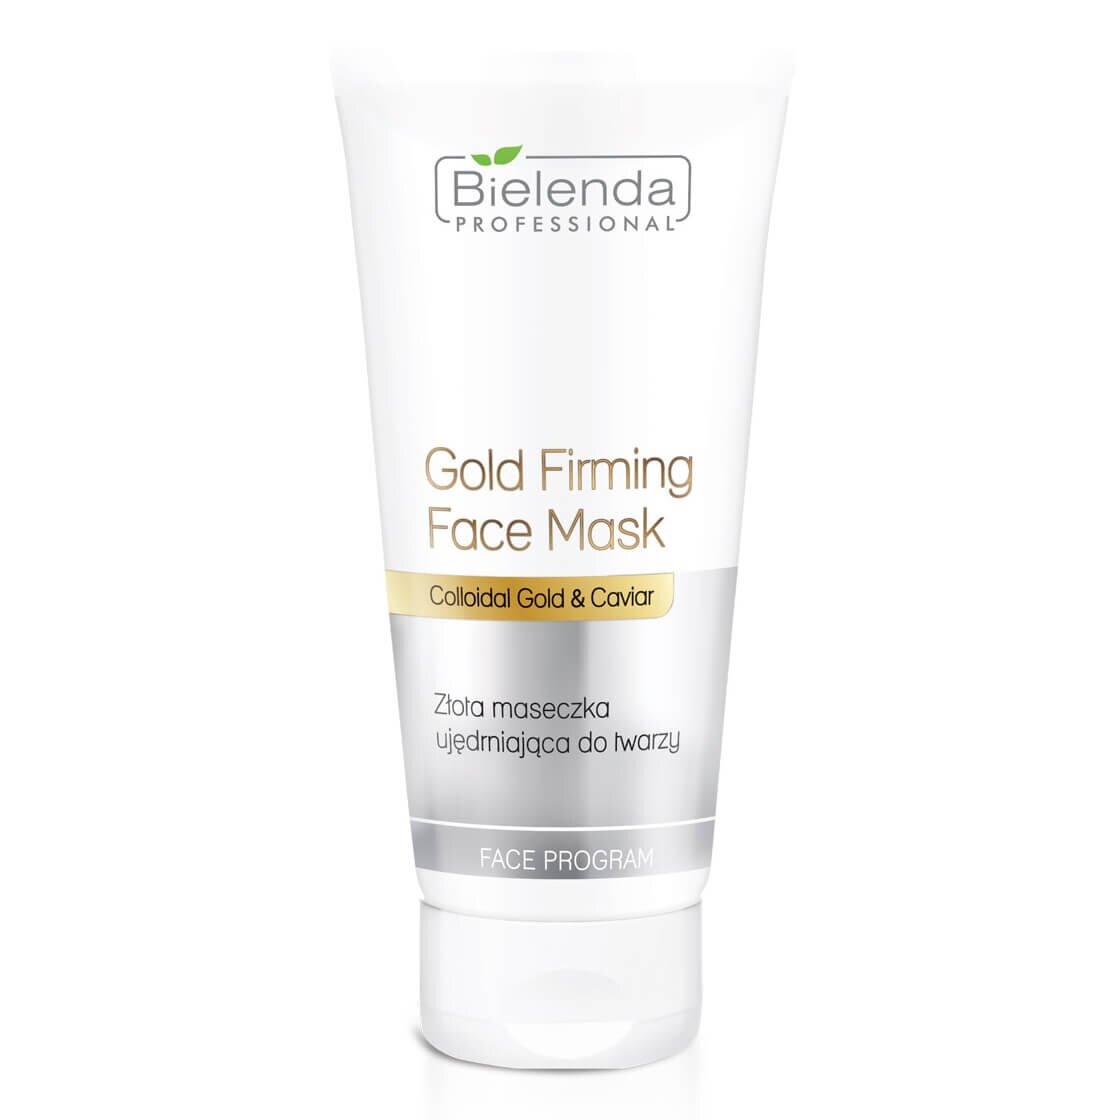 Bielenda Professional Face Program Golden Firming Mask for All Skin Types 175ml